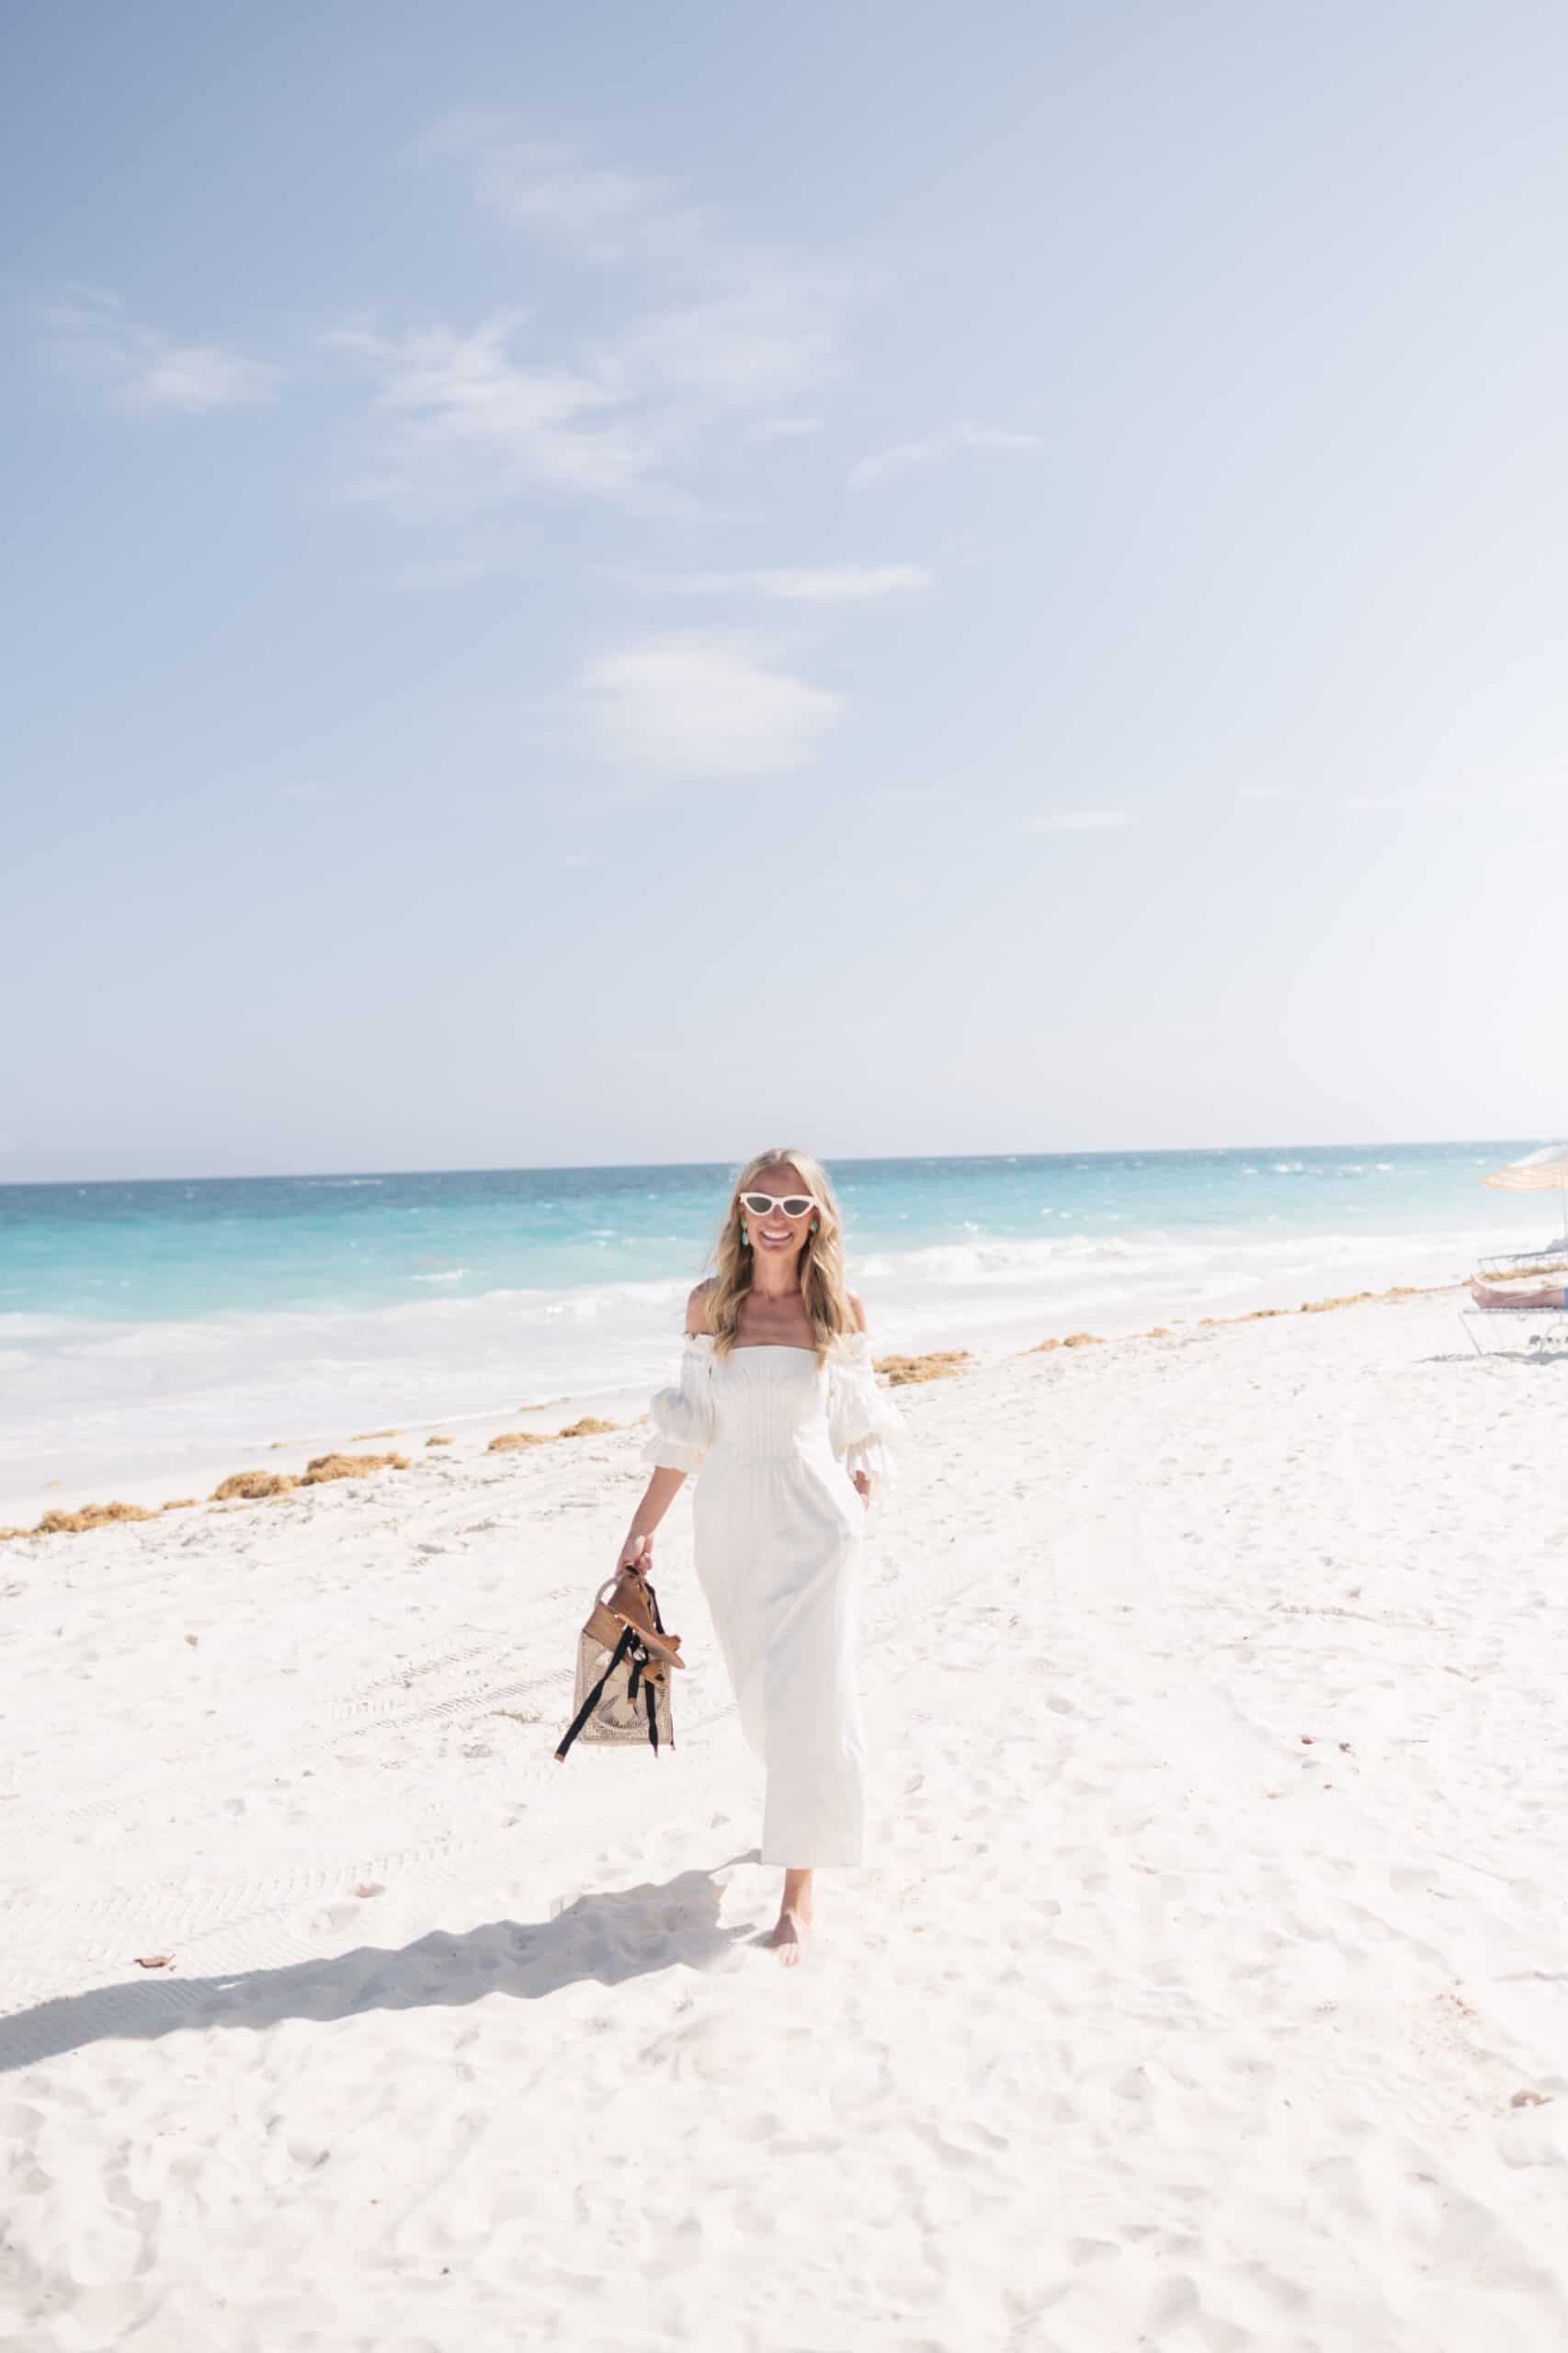 Coral Beach Club Bermuda Wedding - Caribbean Destination Wedding Photographers - The Light + Color